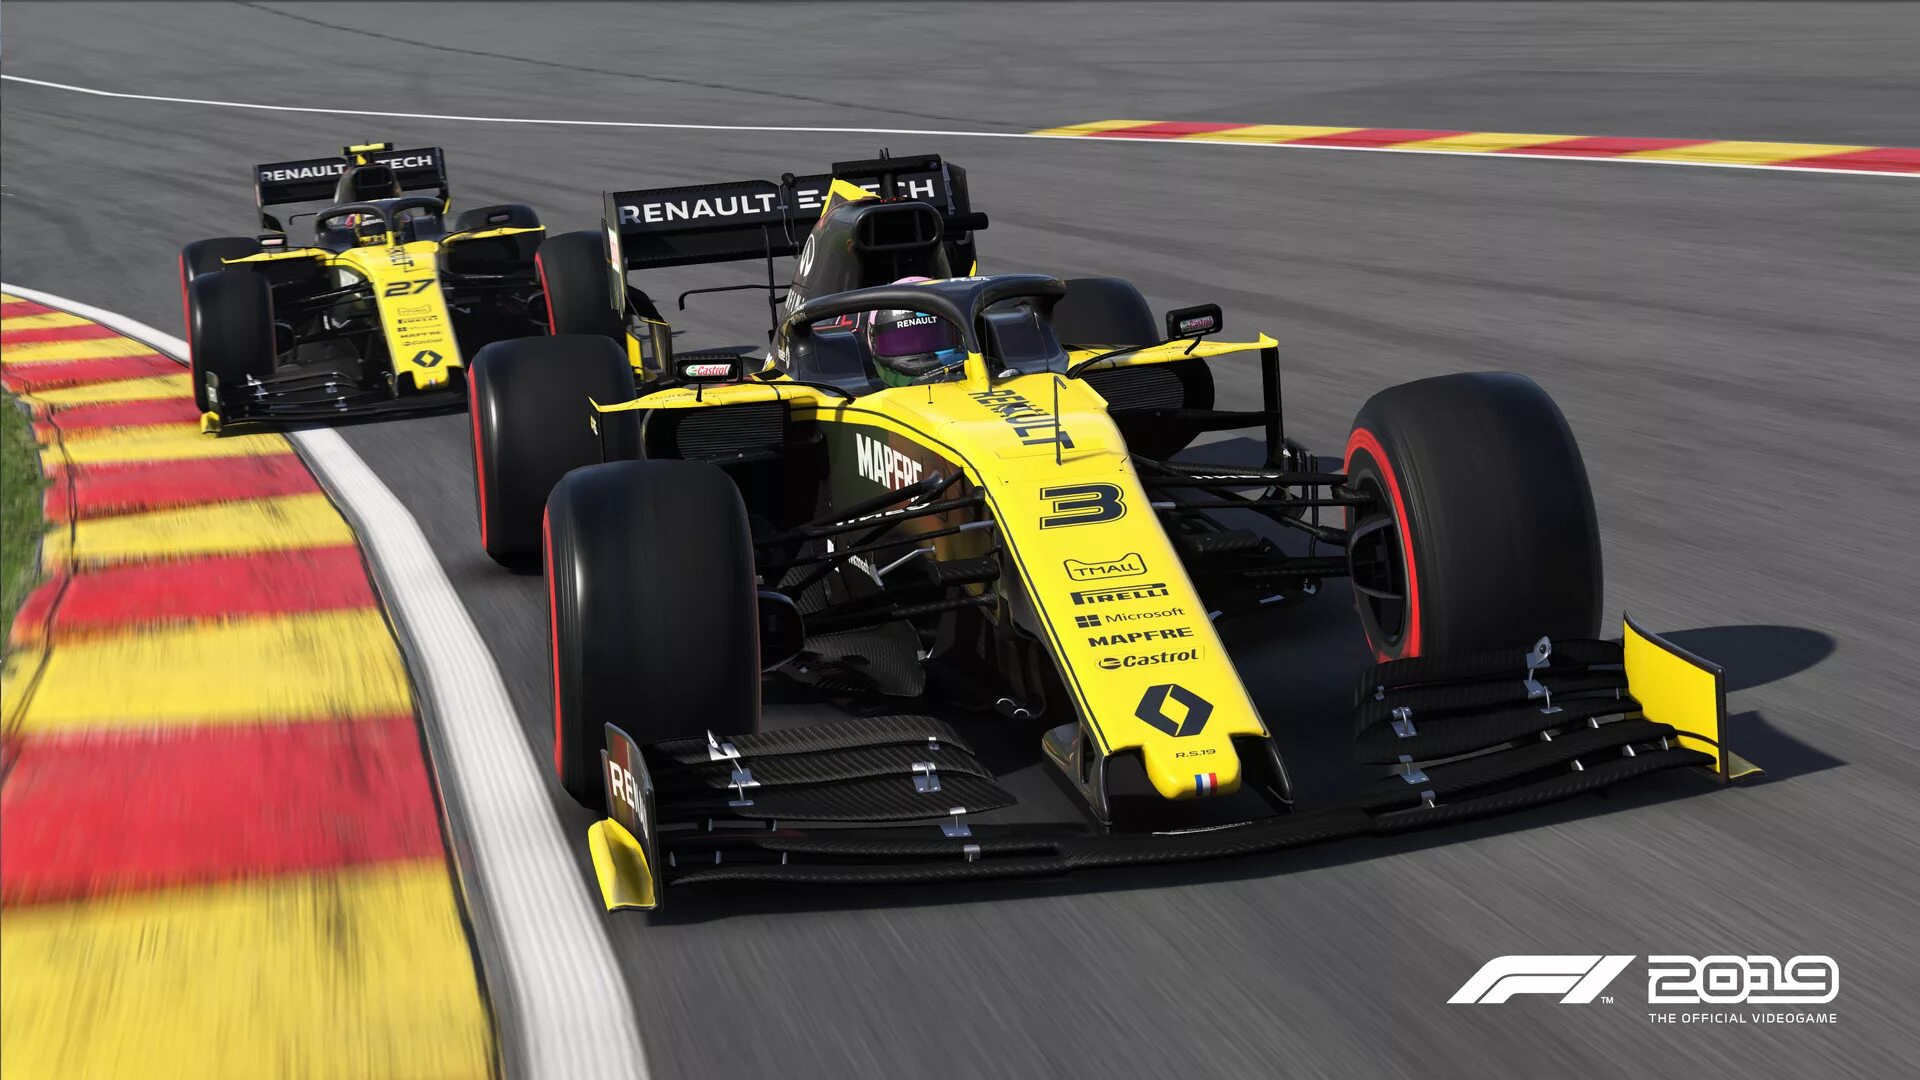 F1 2019. F1 2019 Xbox 360. F1 2019 - Legends Edition. F1 2019 game.